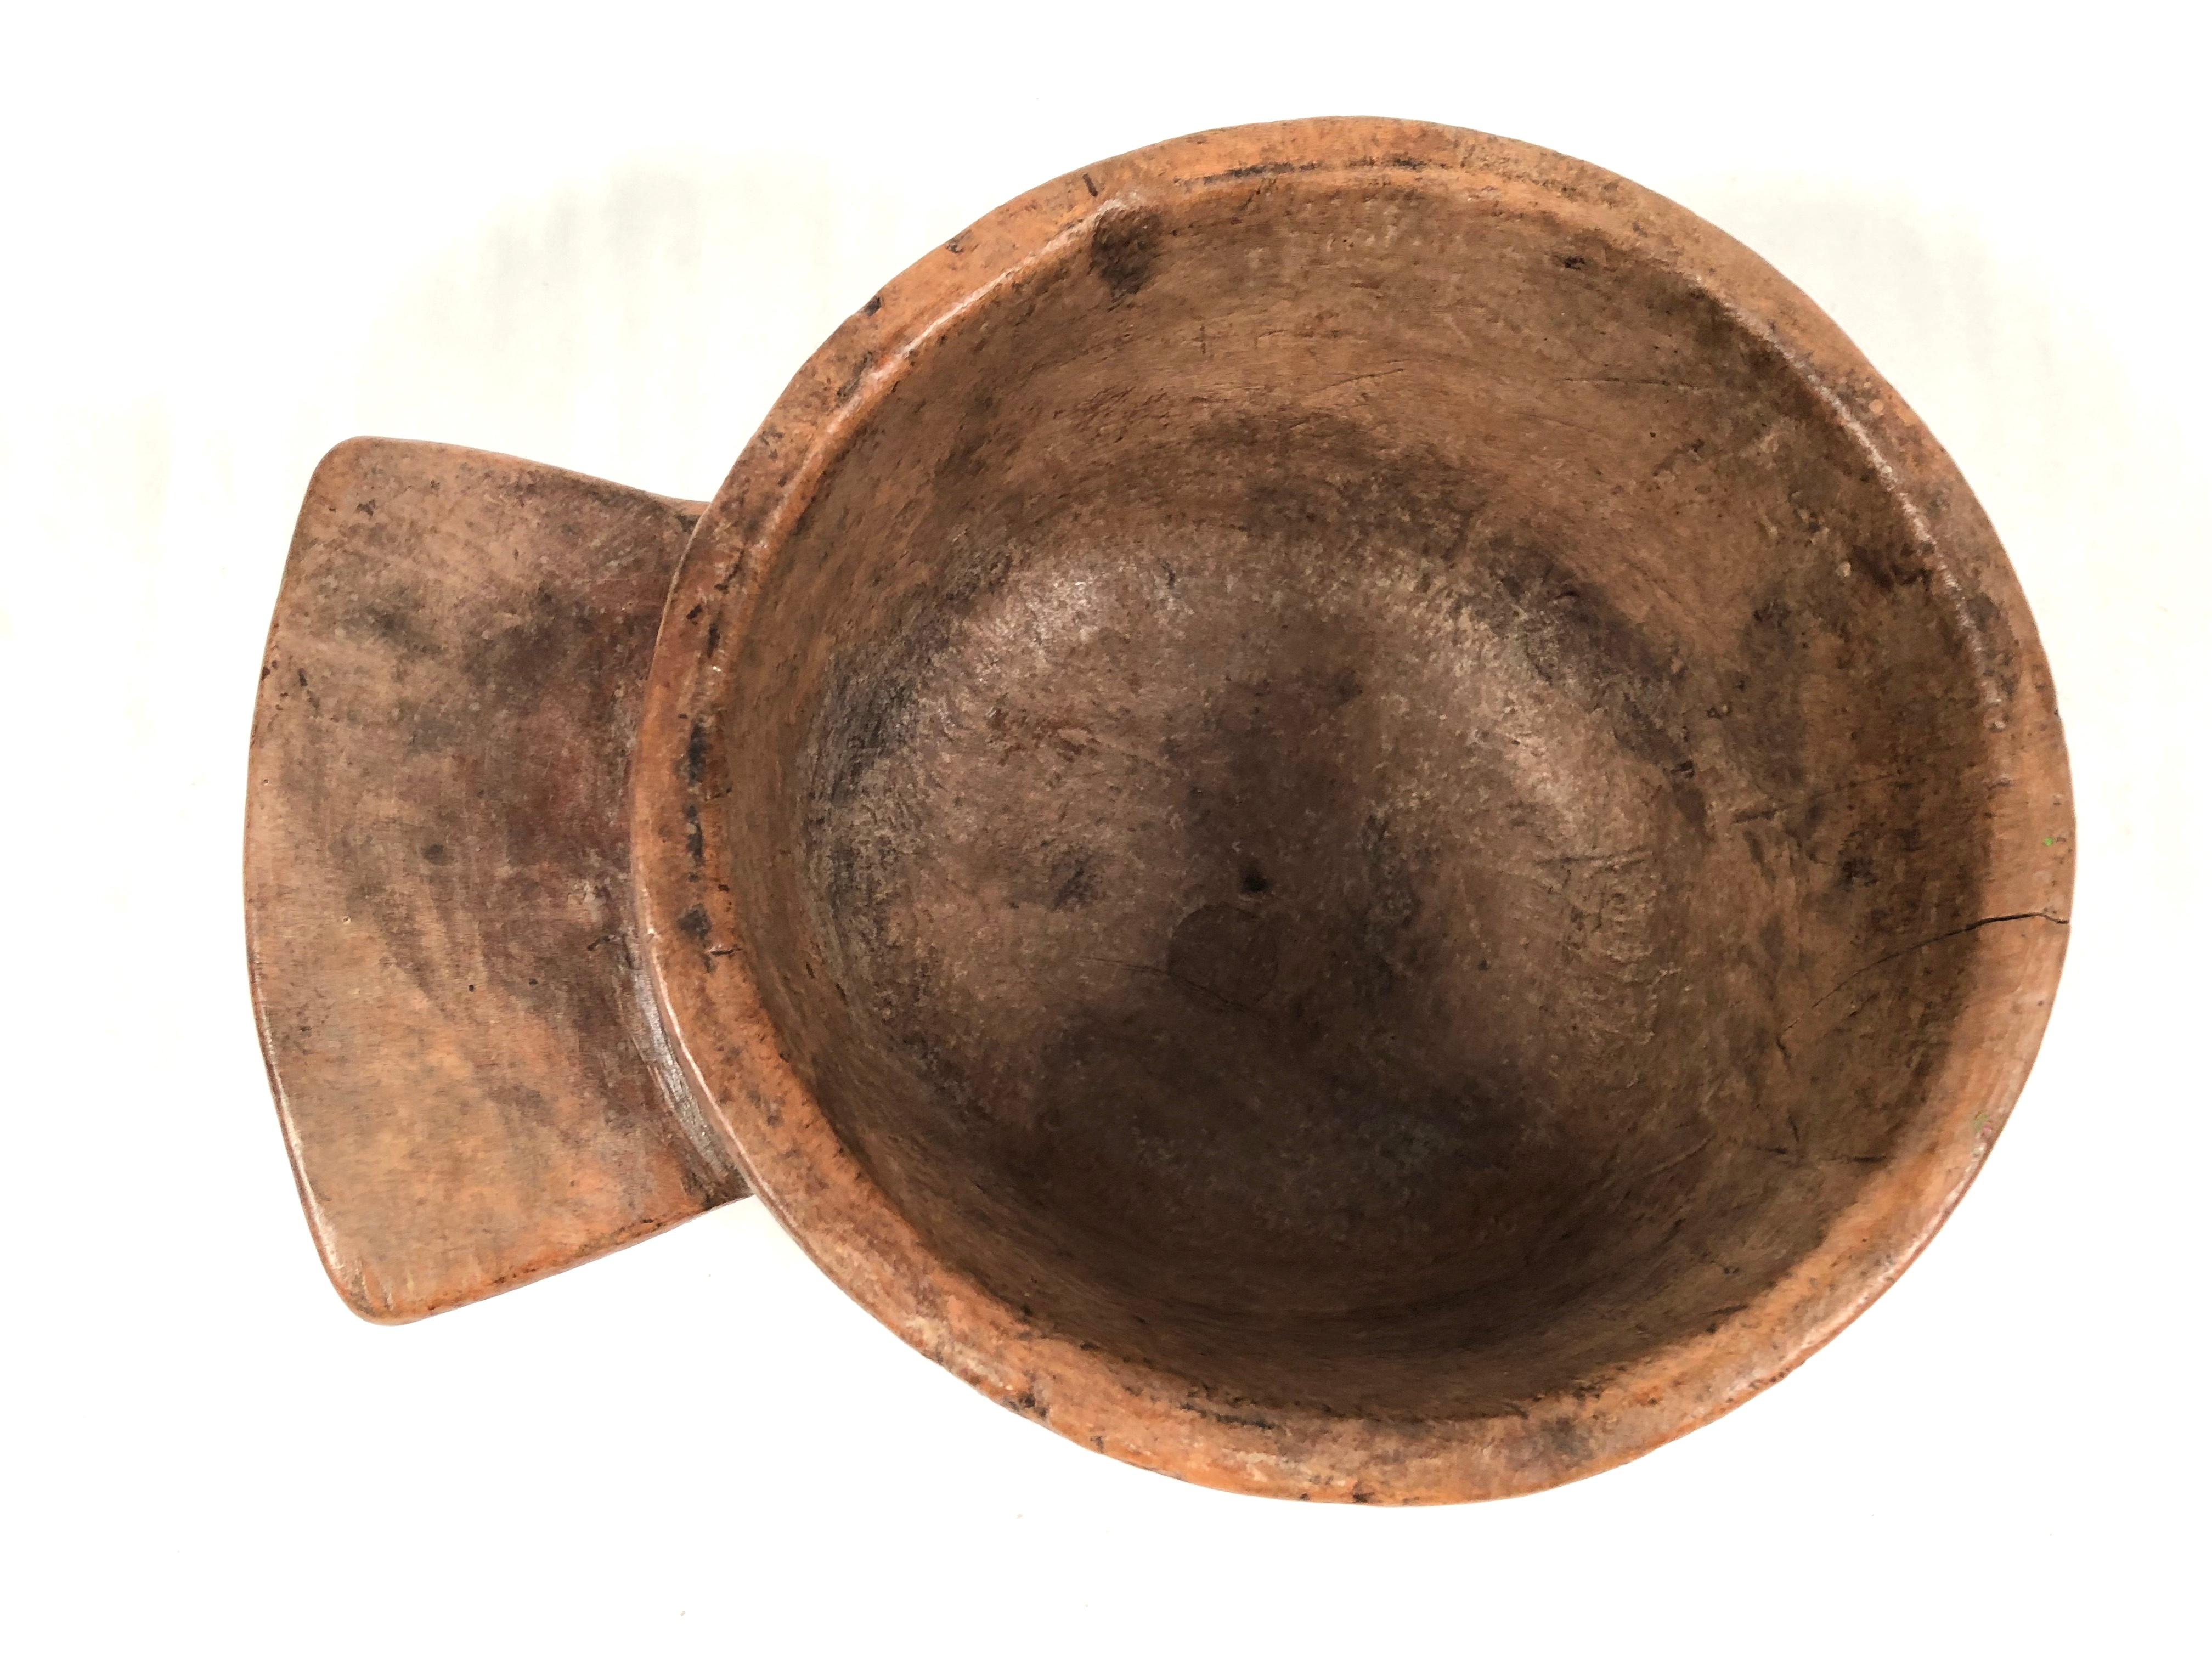 Early Primitive Carved Wood Bowl (18. Jahrhundert und früher)